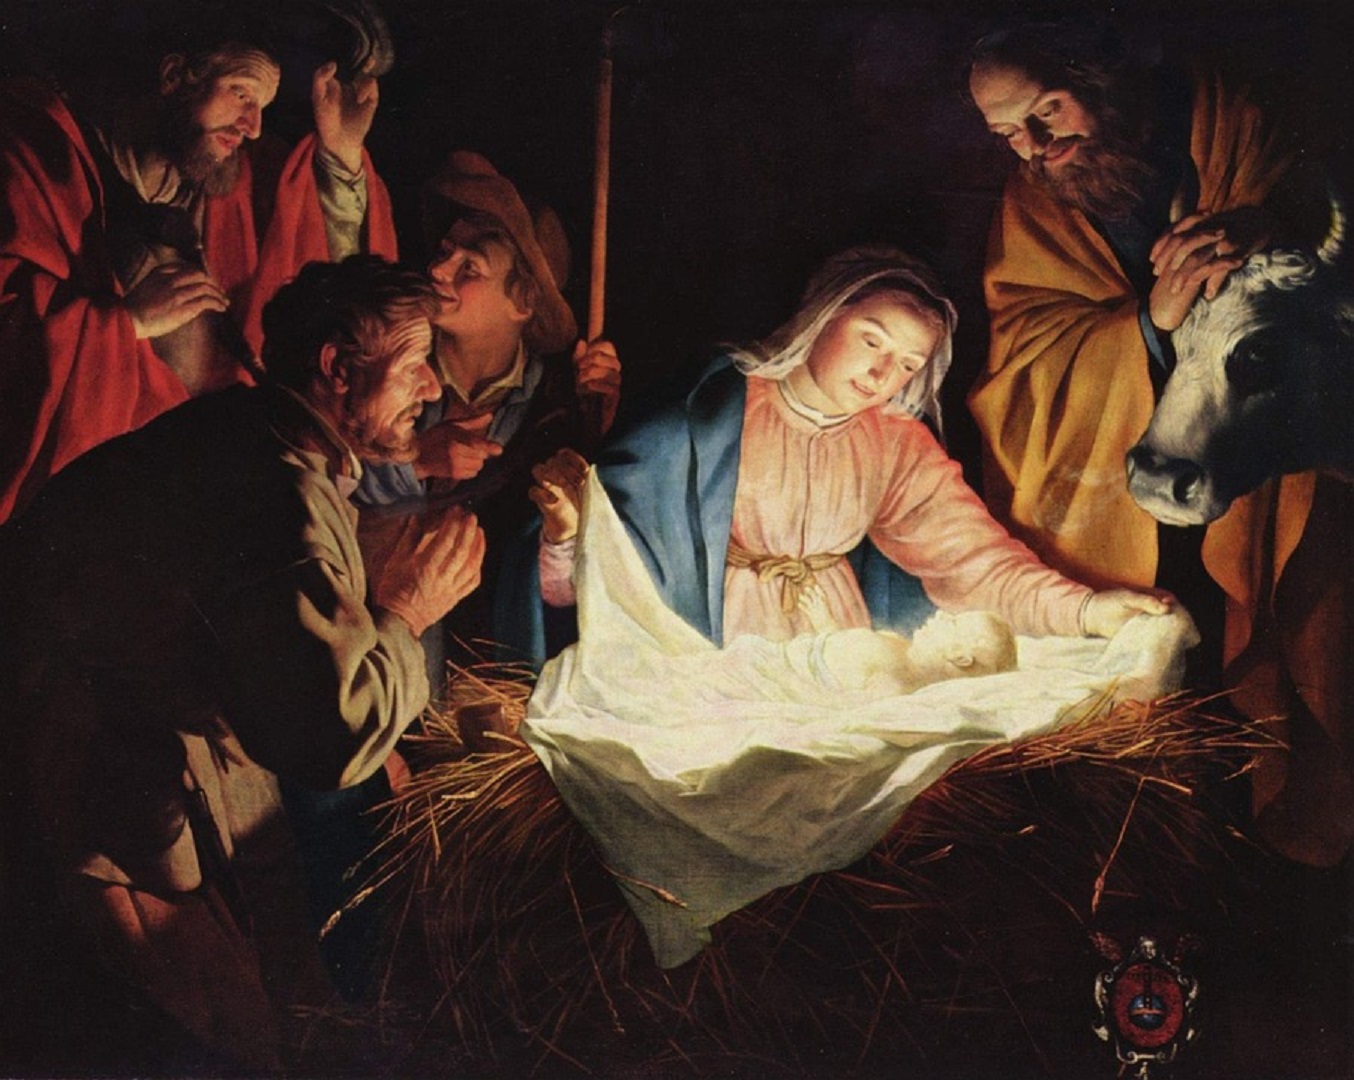 Nativity scene - Gerard van Honthorst (1592 - 1656)